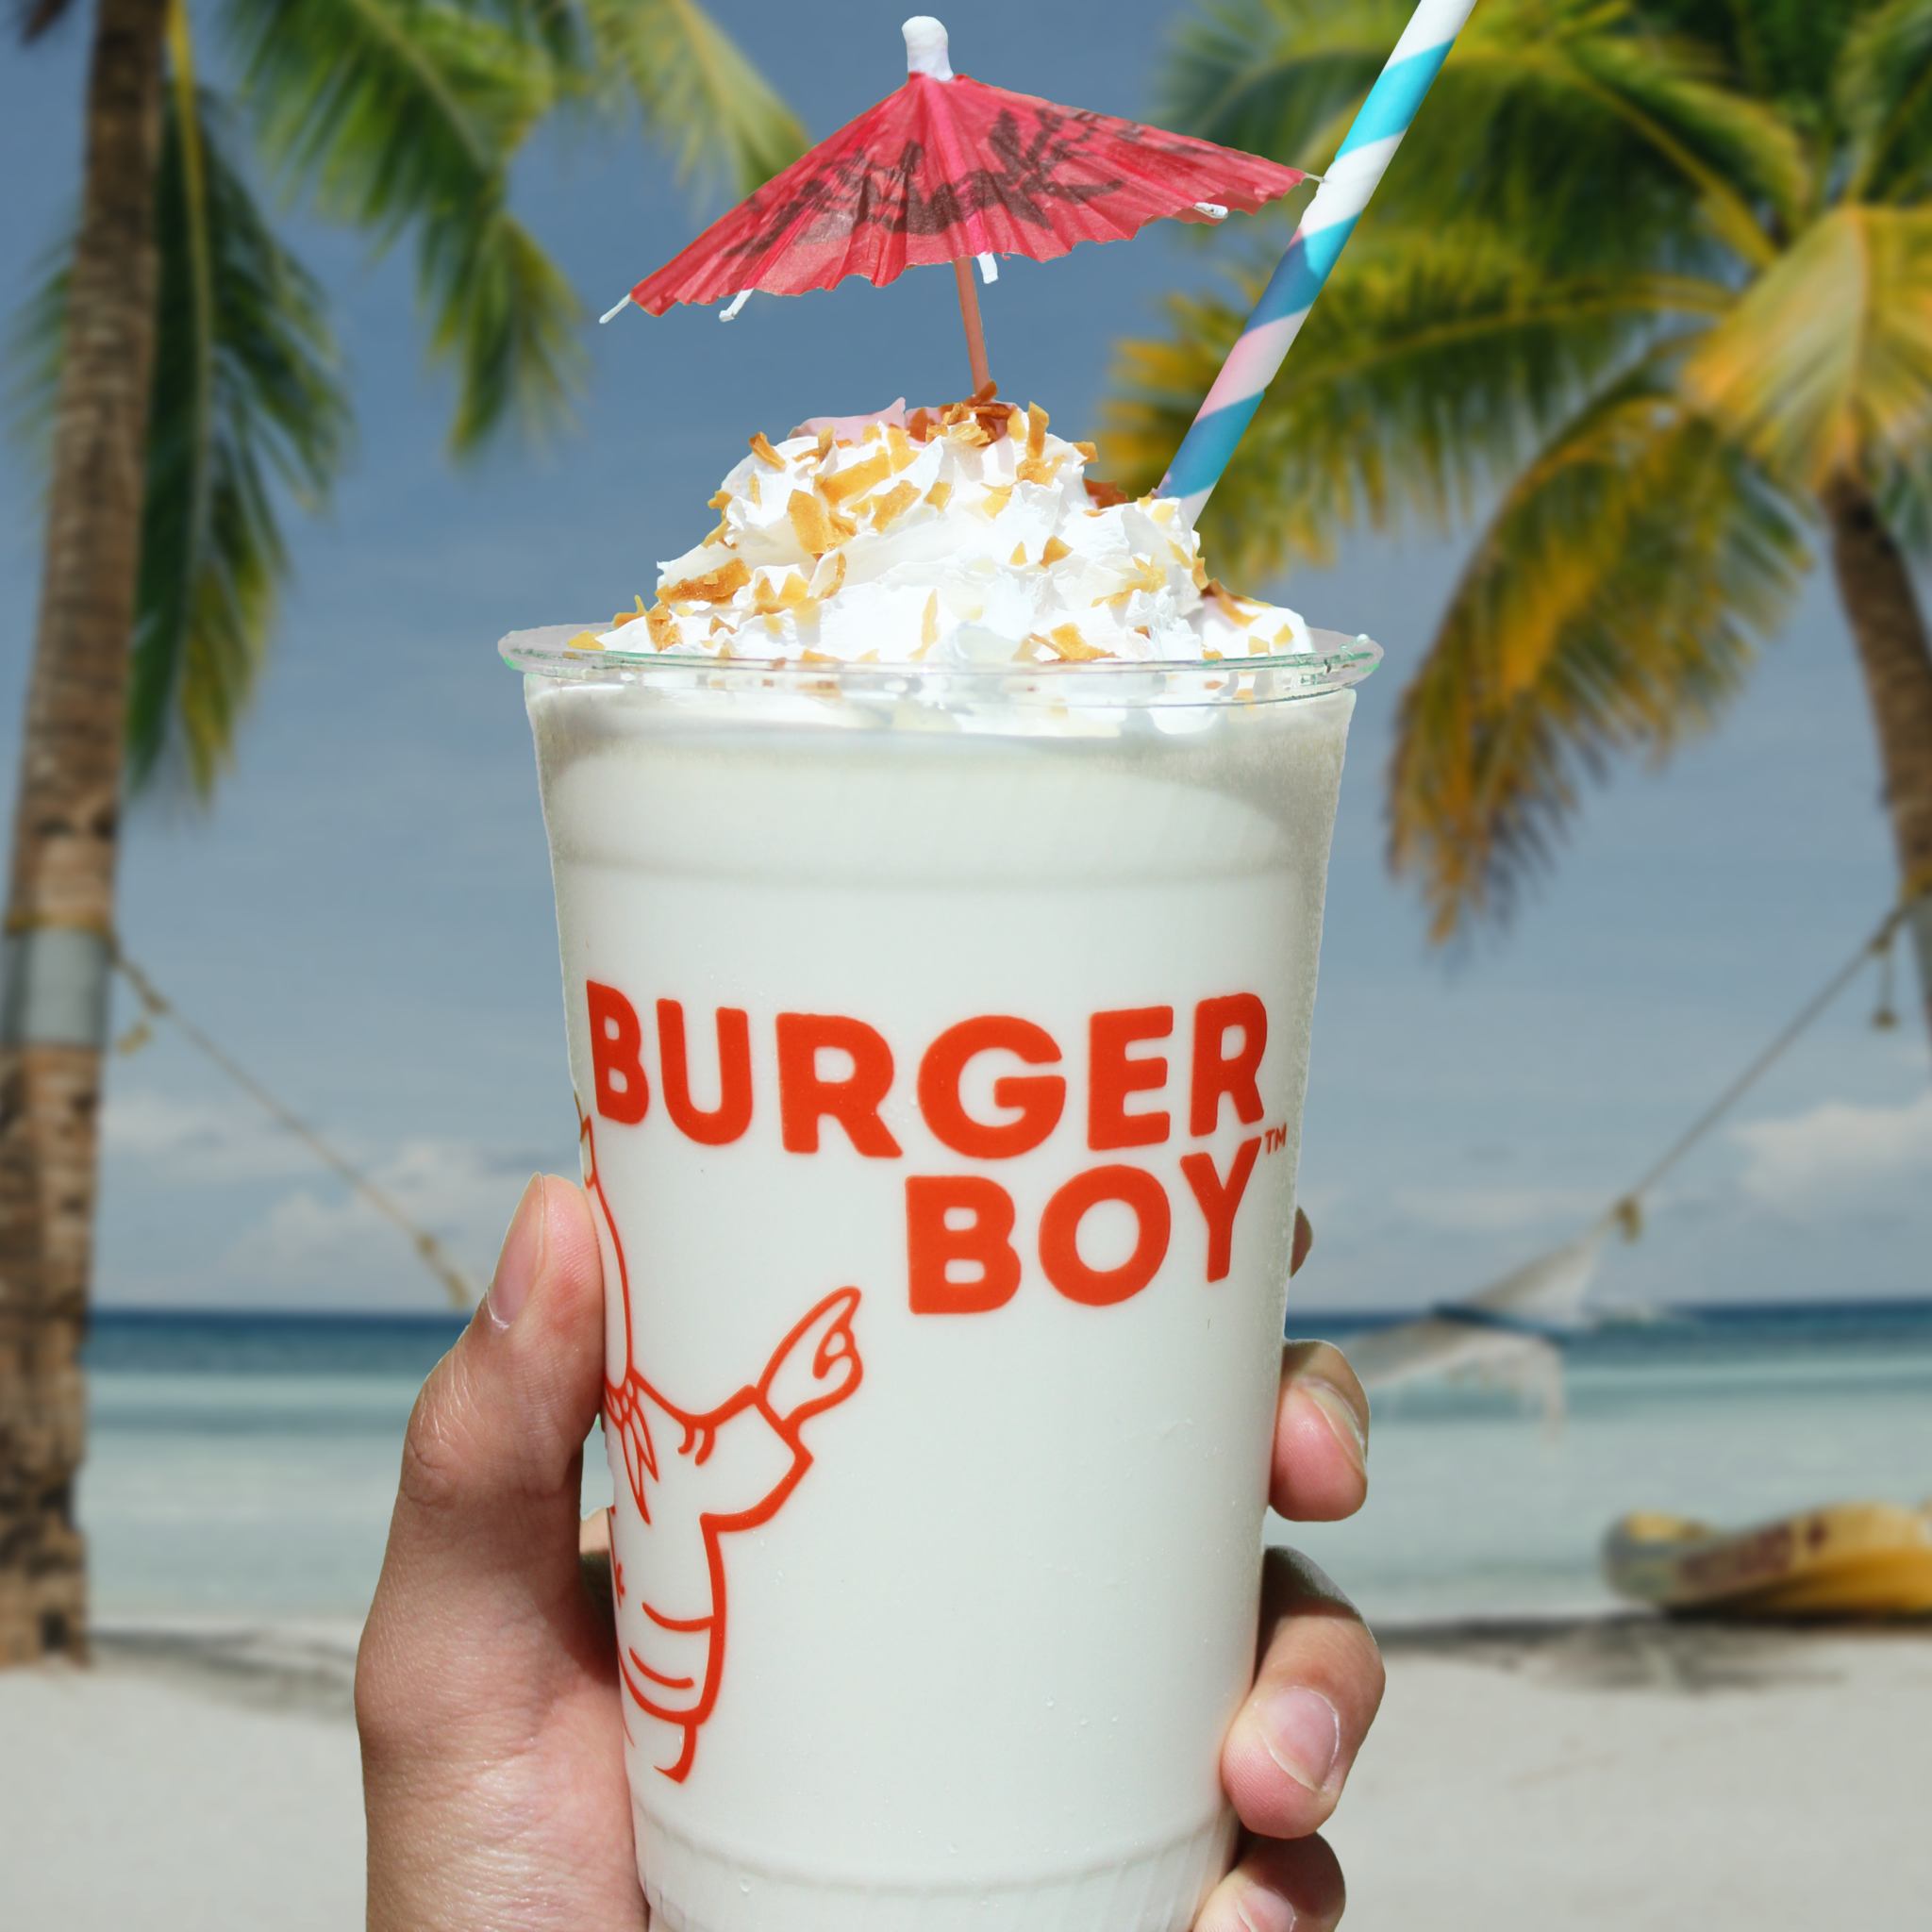 Burger Boy introduces new milkshake flavor just in time for summer